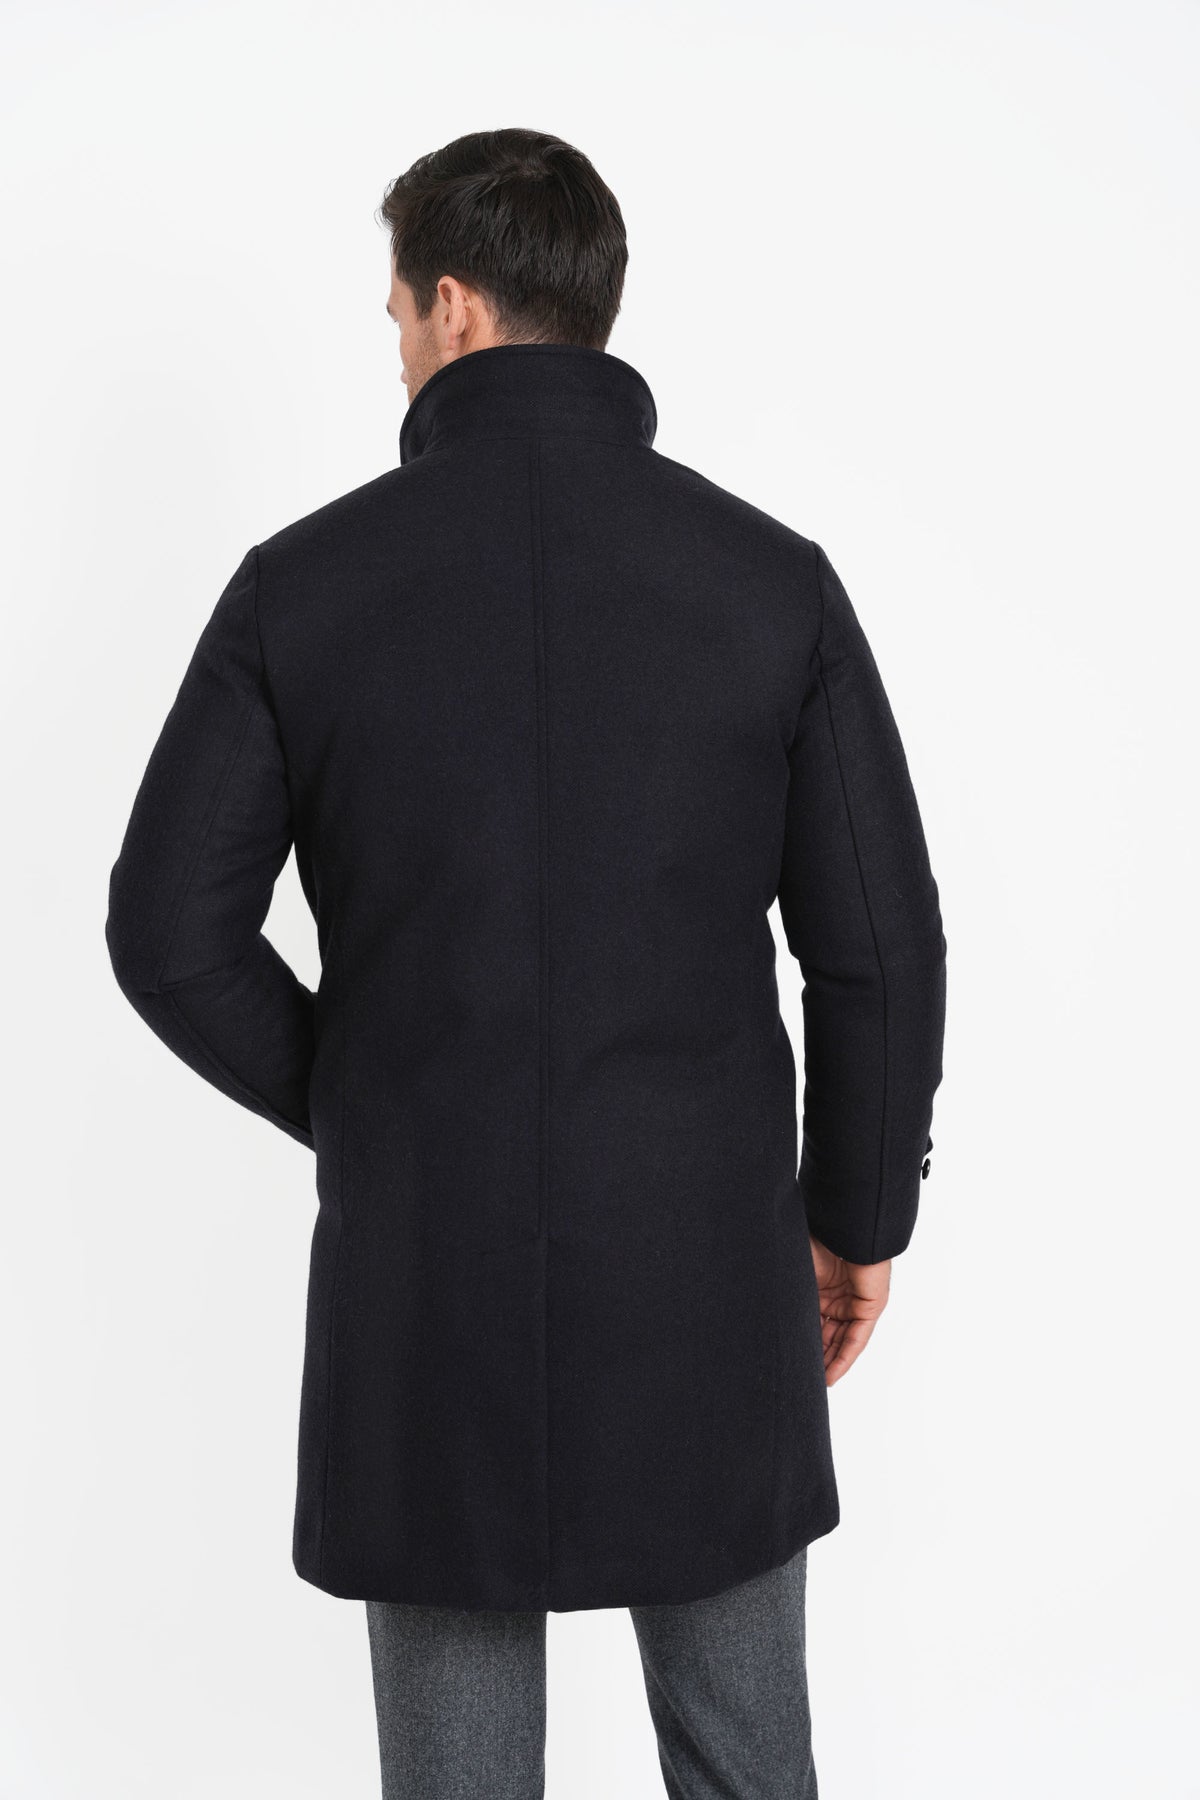 Cashmere Wool ¾ Length Black